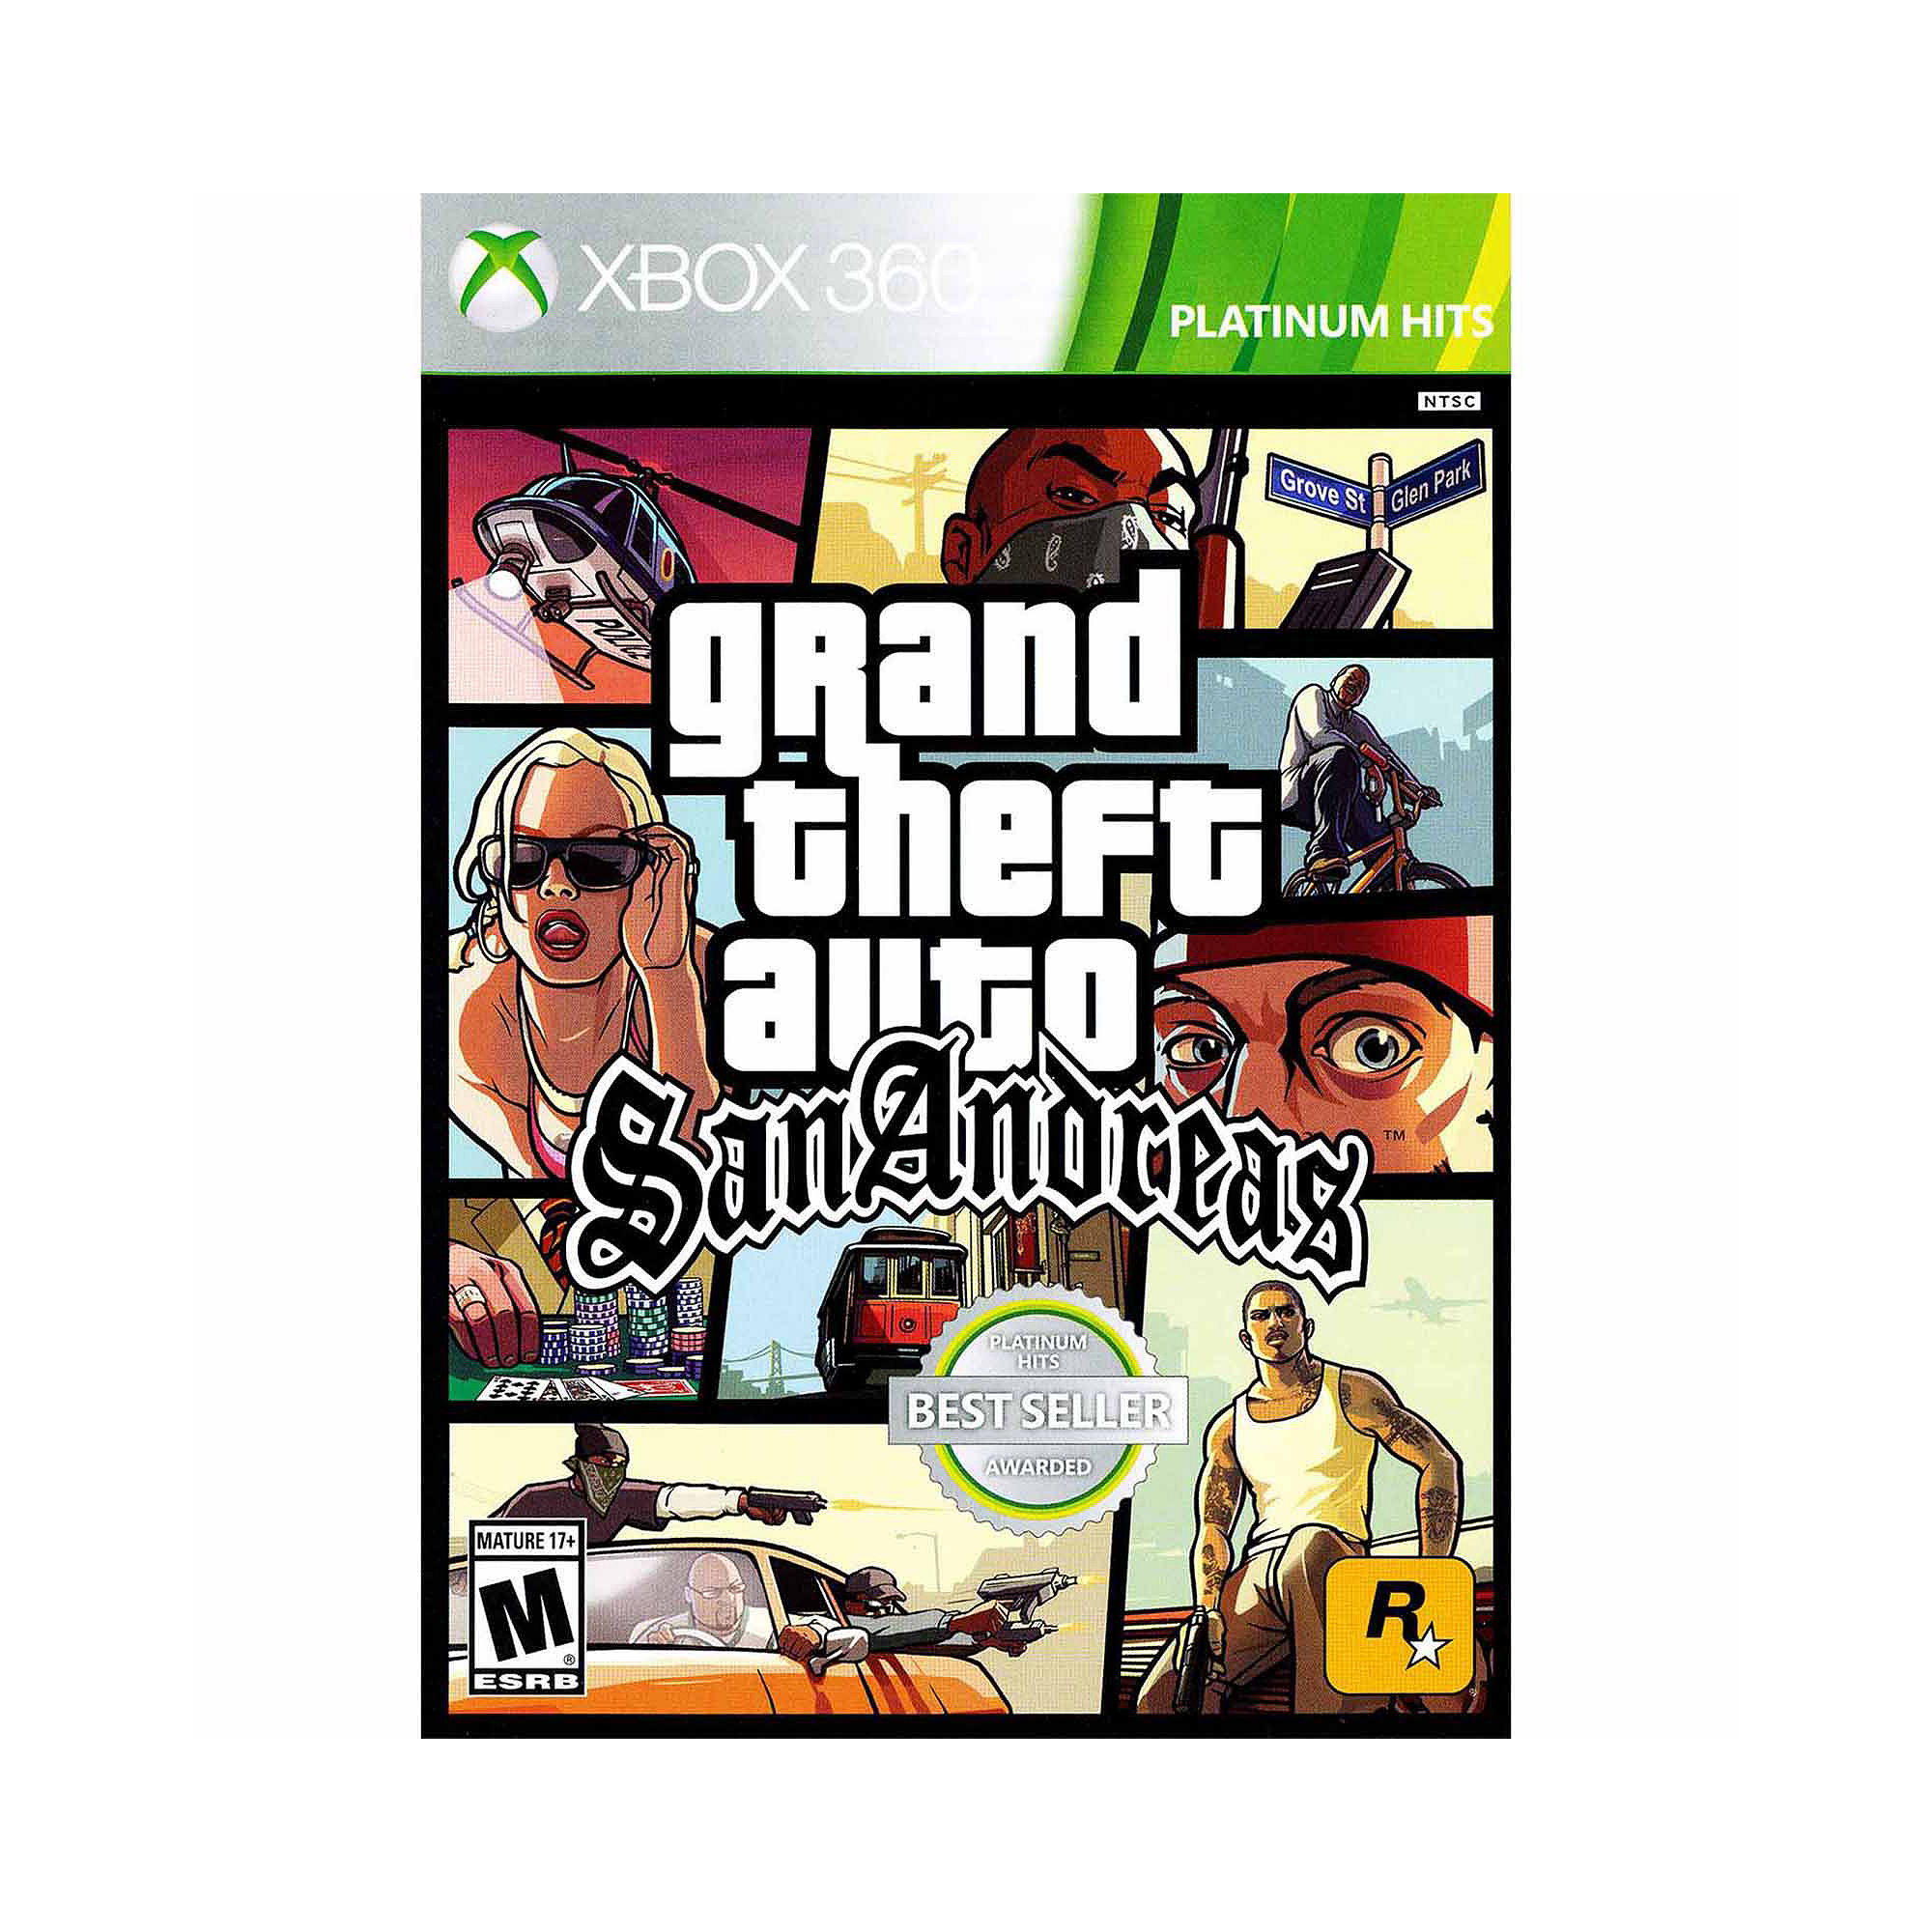 Grand Theft Auto: San Andreas, Rockstar Games, Xbox 360, 710425495649 - image 3 of 4